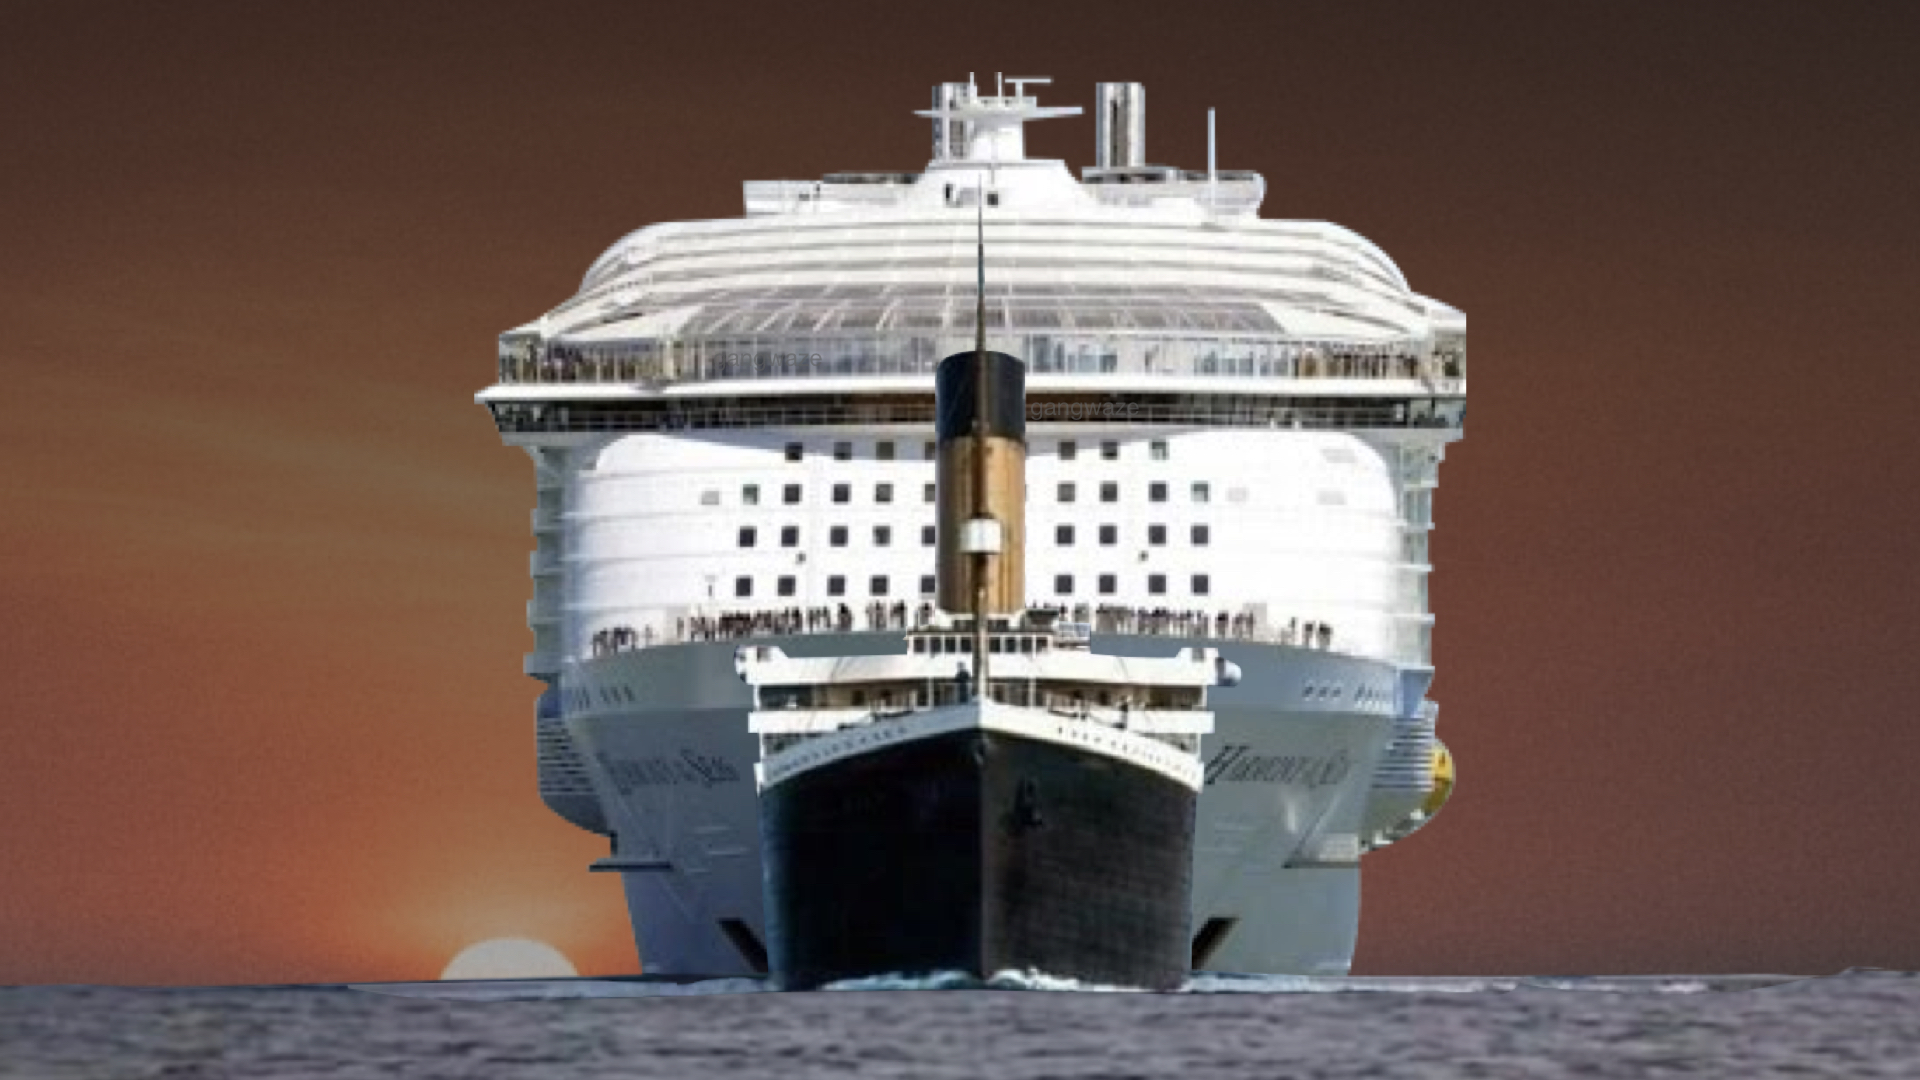 Ota selvää 36+ imagen titanic vs new ship